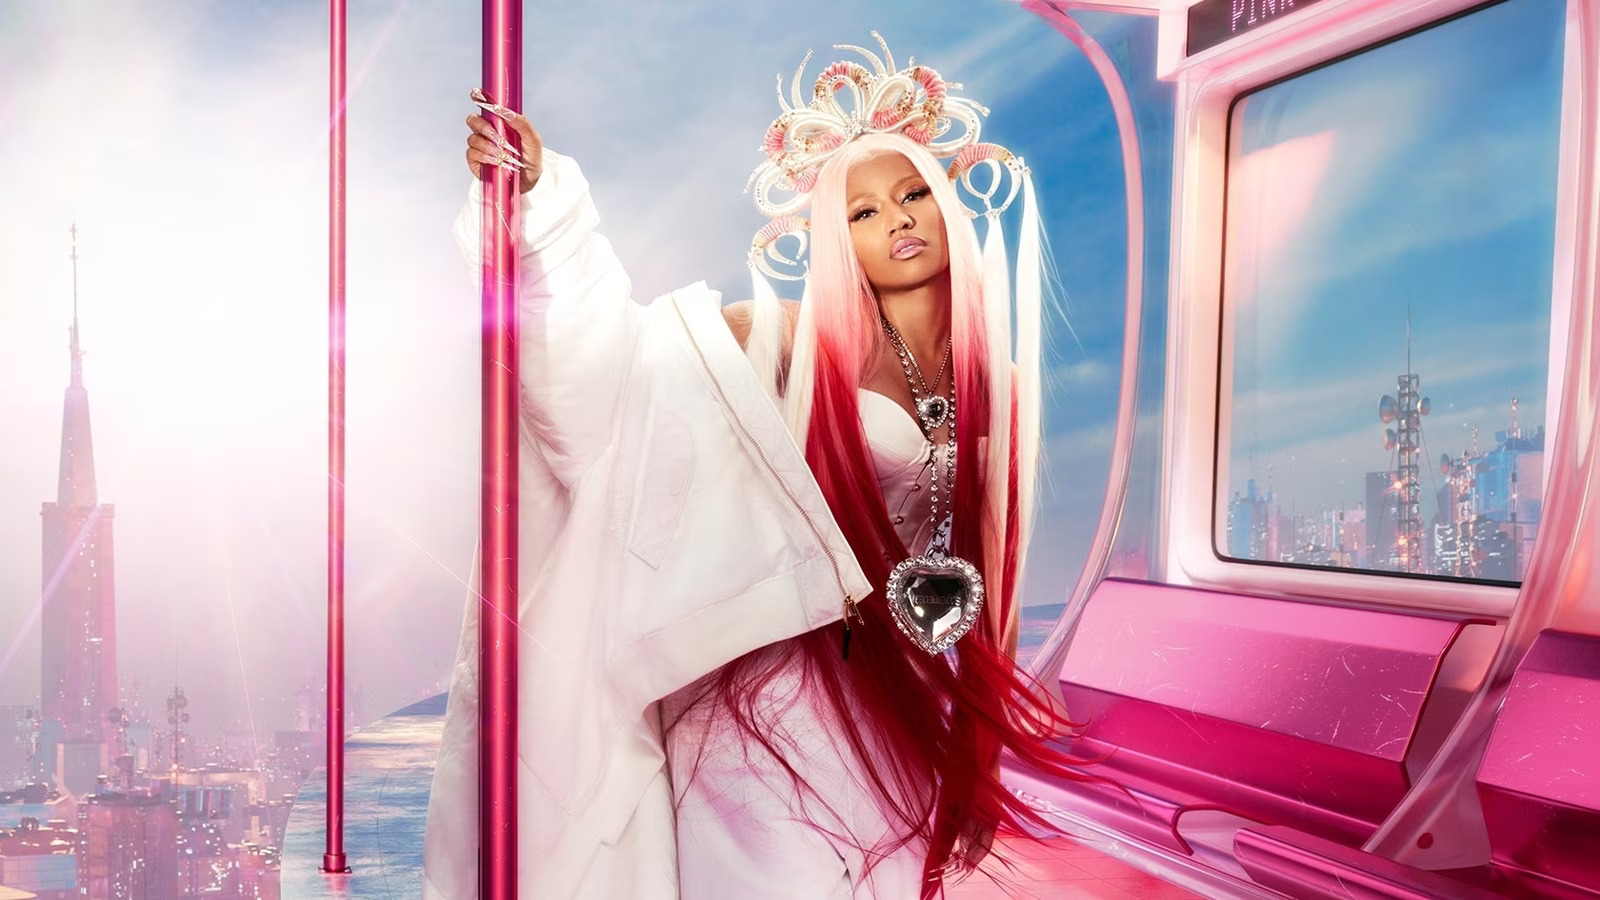 Nicki Minaj Dominates Charts with Billboard-Topping Success of 'Pink Friday 2'